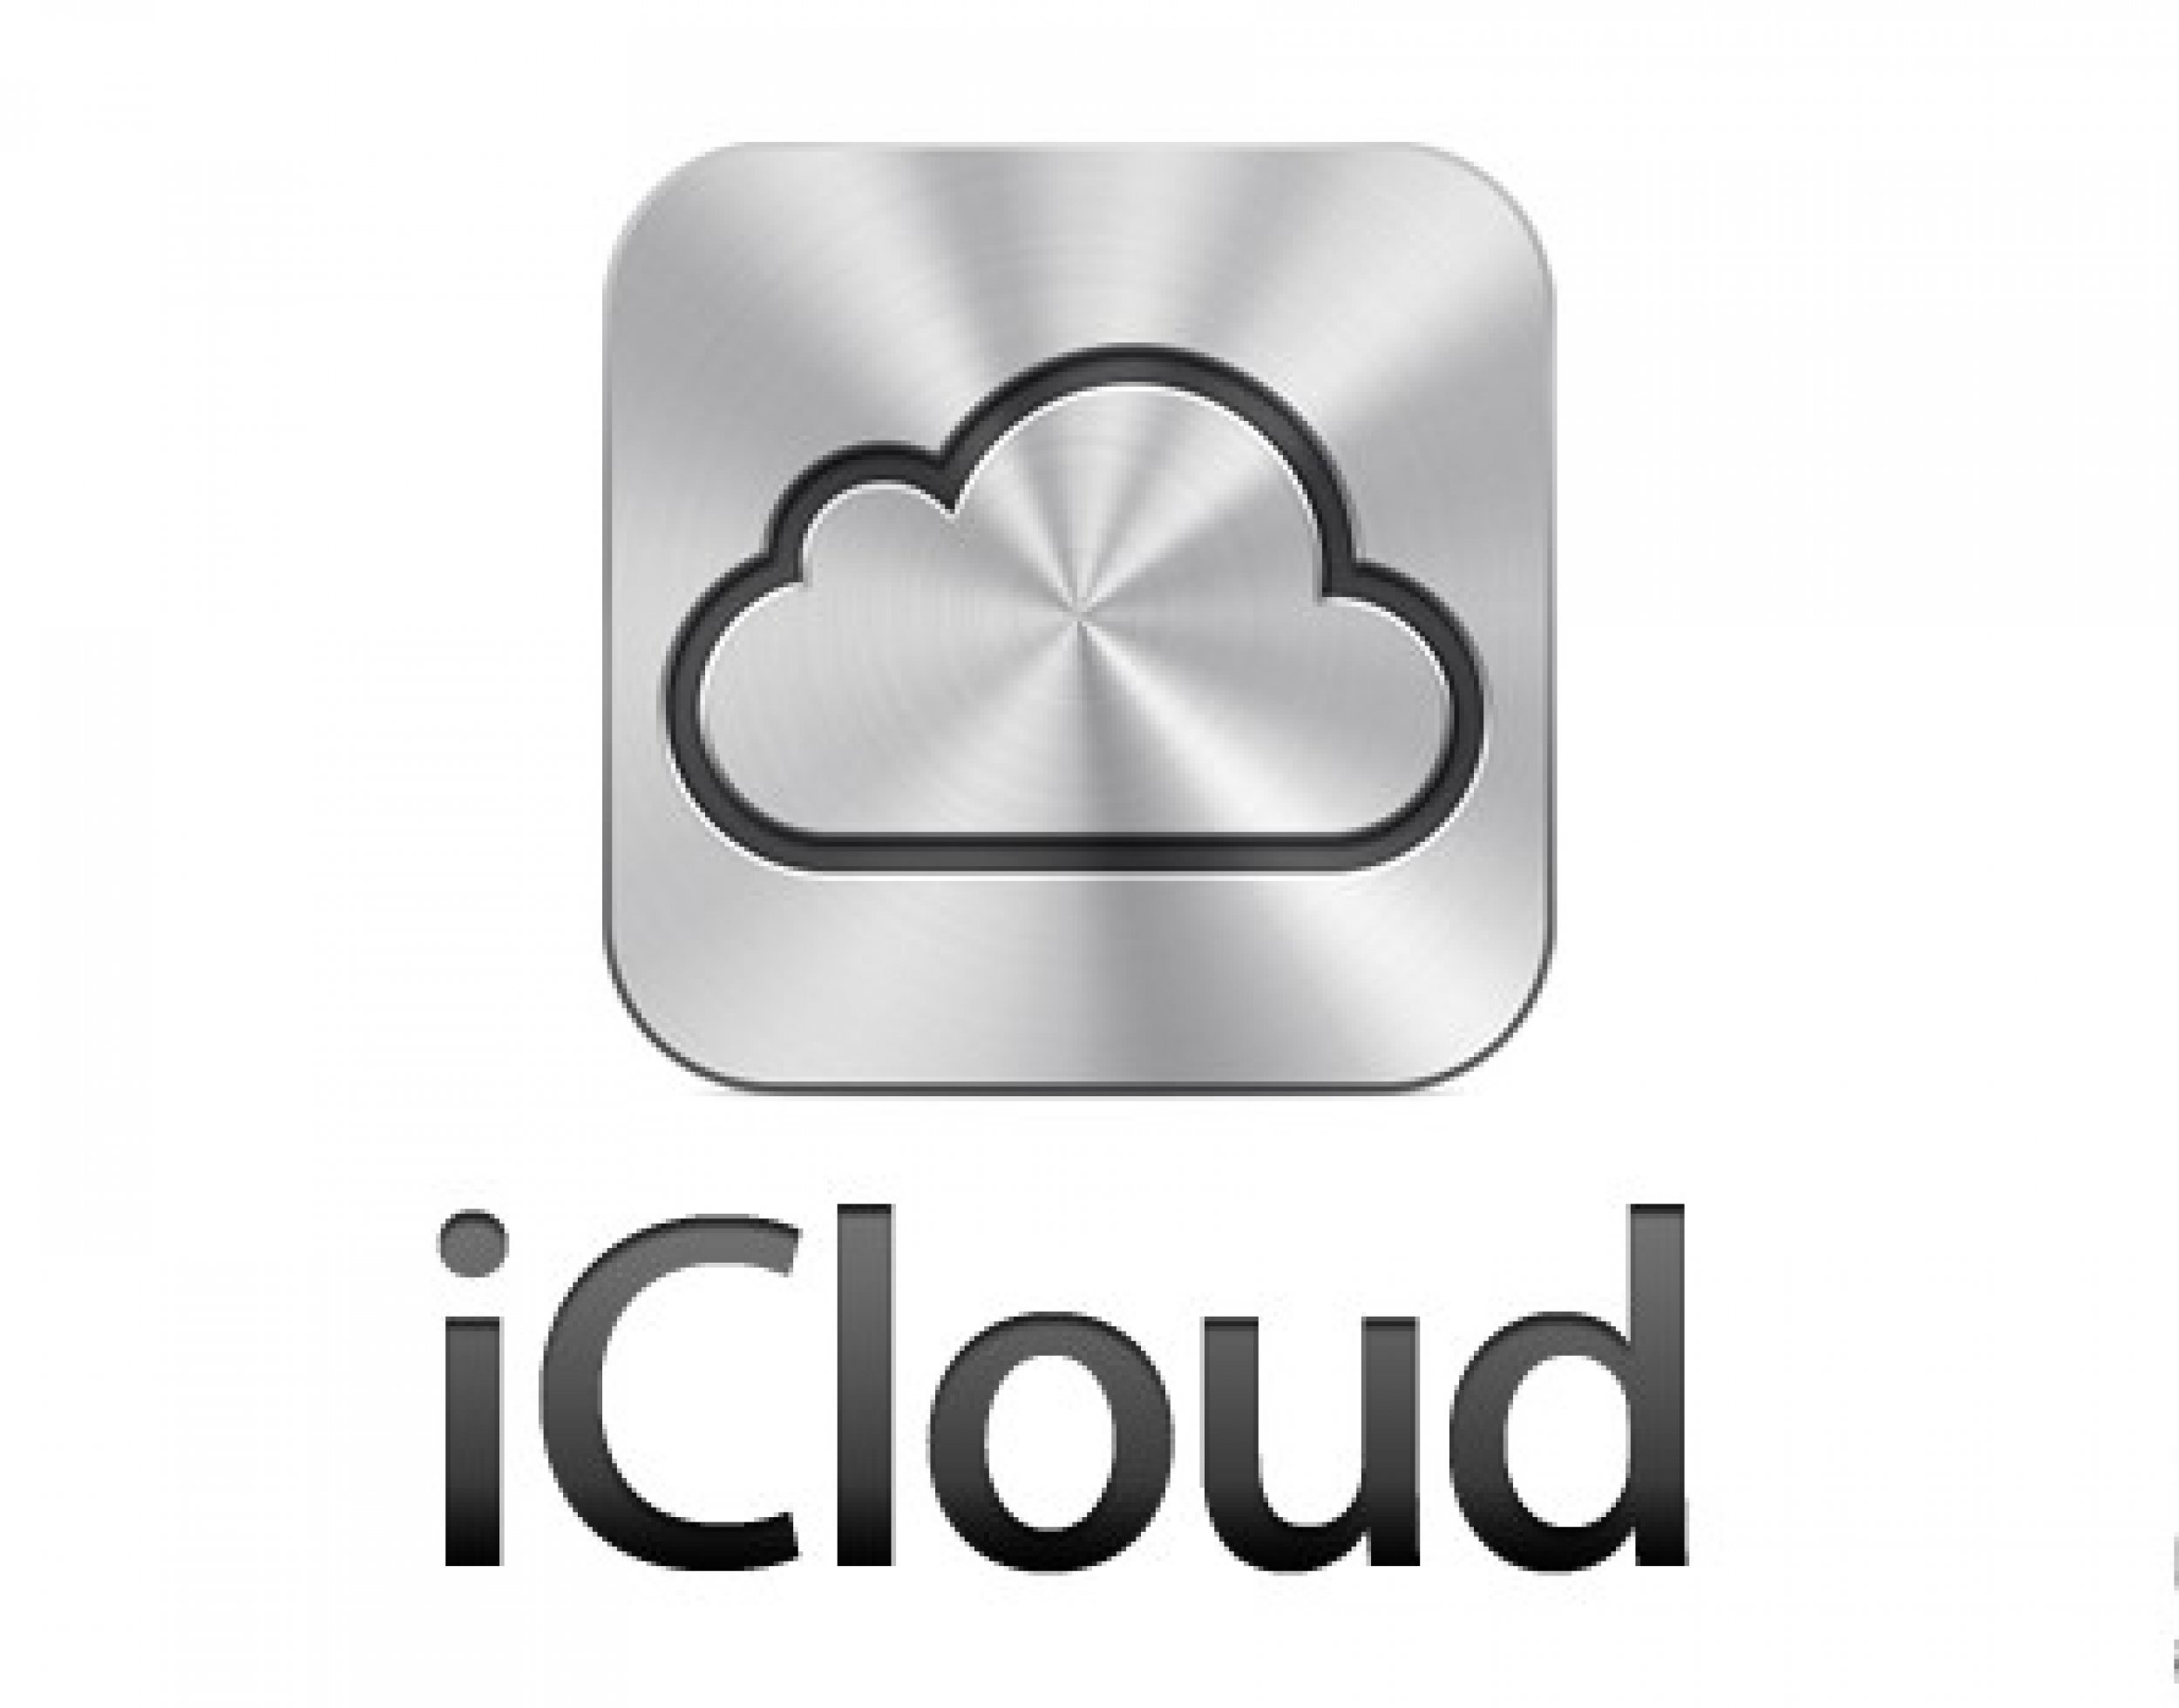 iCloud for iOS 5